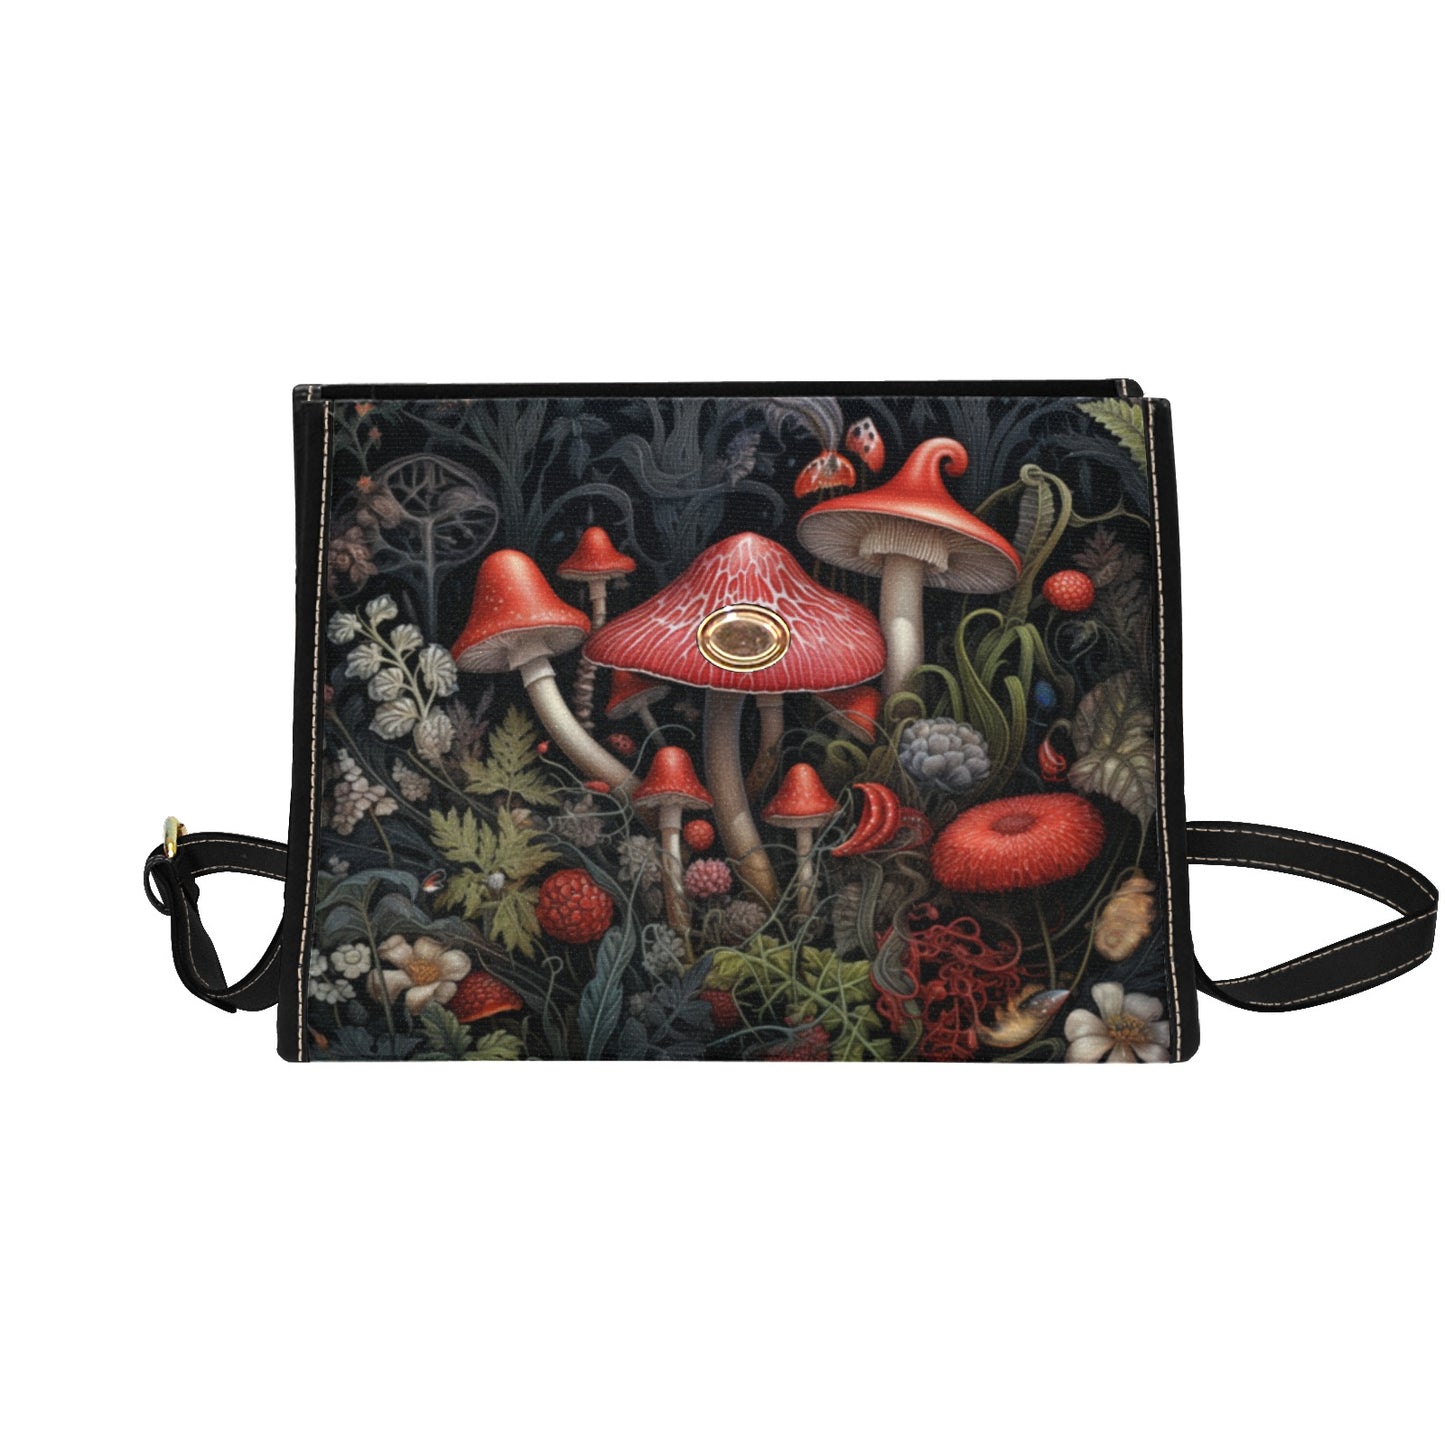 Red Mushroom Canvas Satchel bag, Wildflowers Forest Vintage Cottagecore Waterproof Cute Women Crossbody Purse Vegan Leather Strap Handbag Starcove Fashion